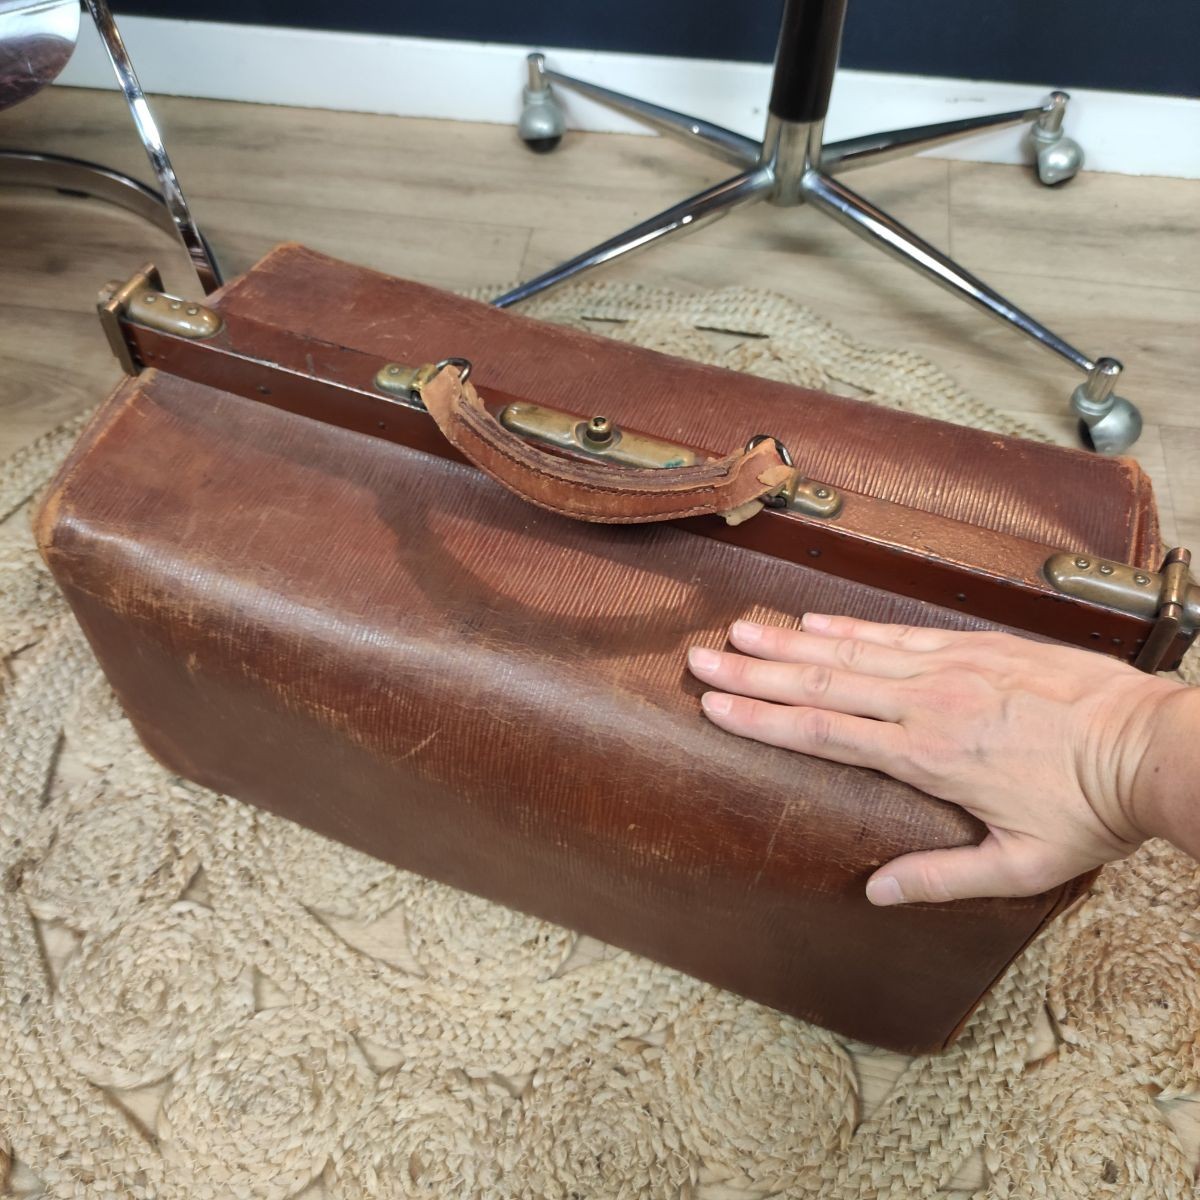 Leather Doctor Gladstone Bag - Monalisa